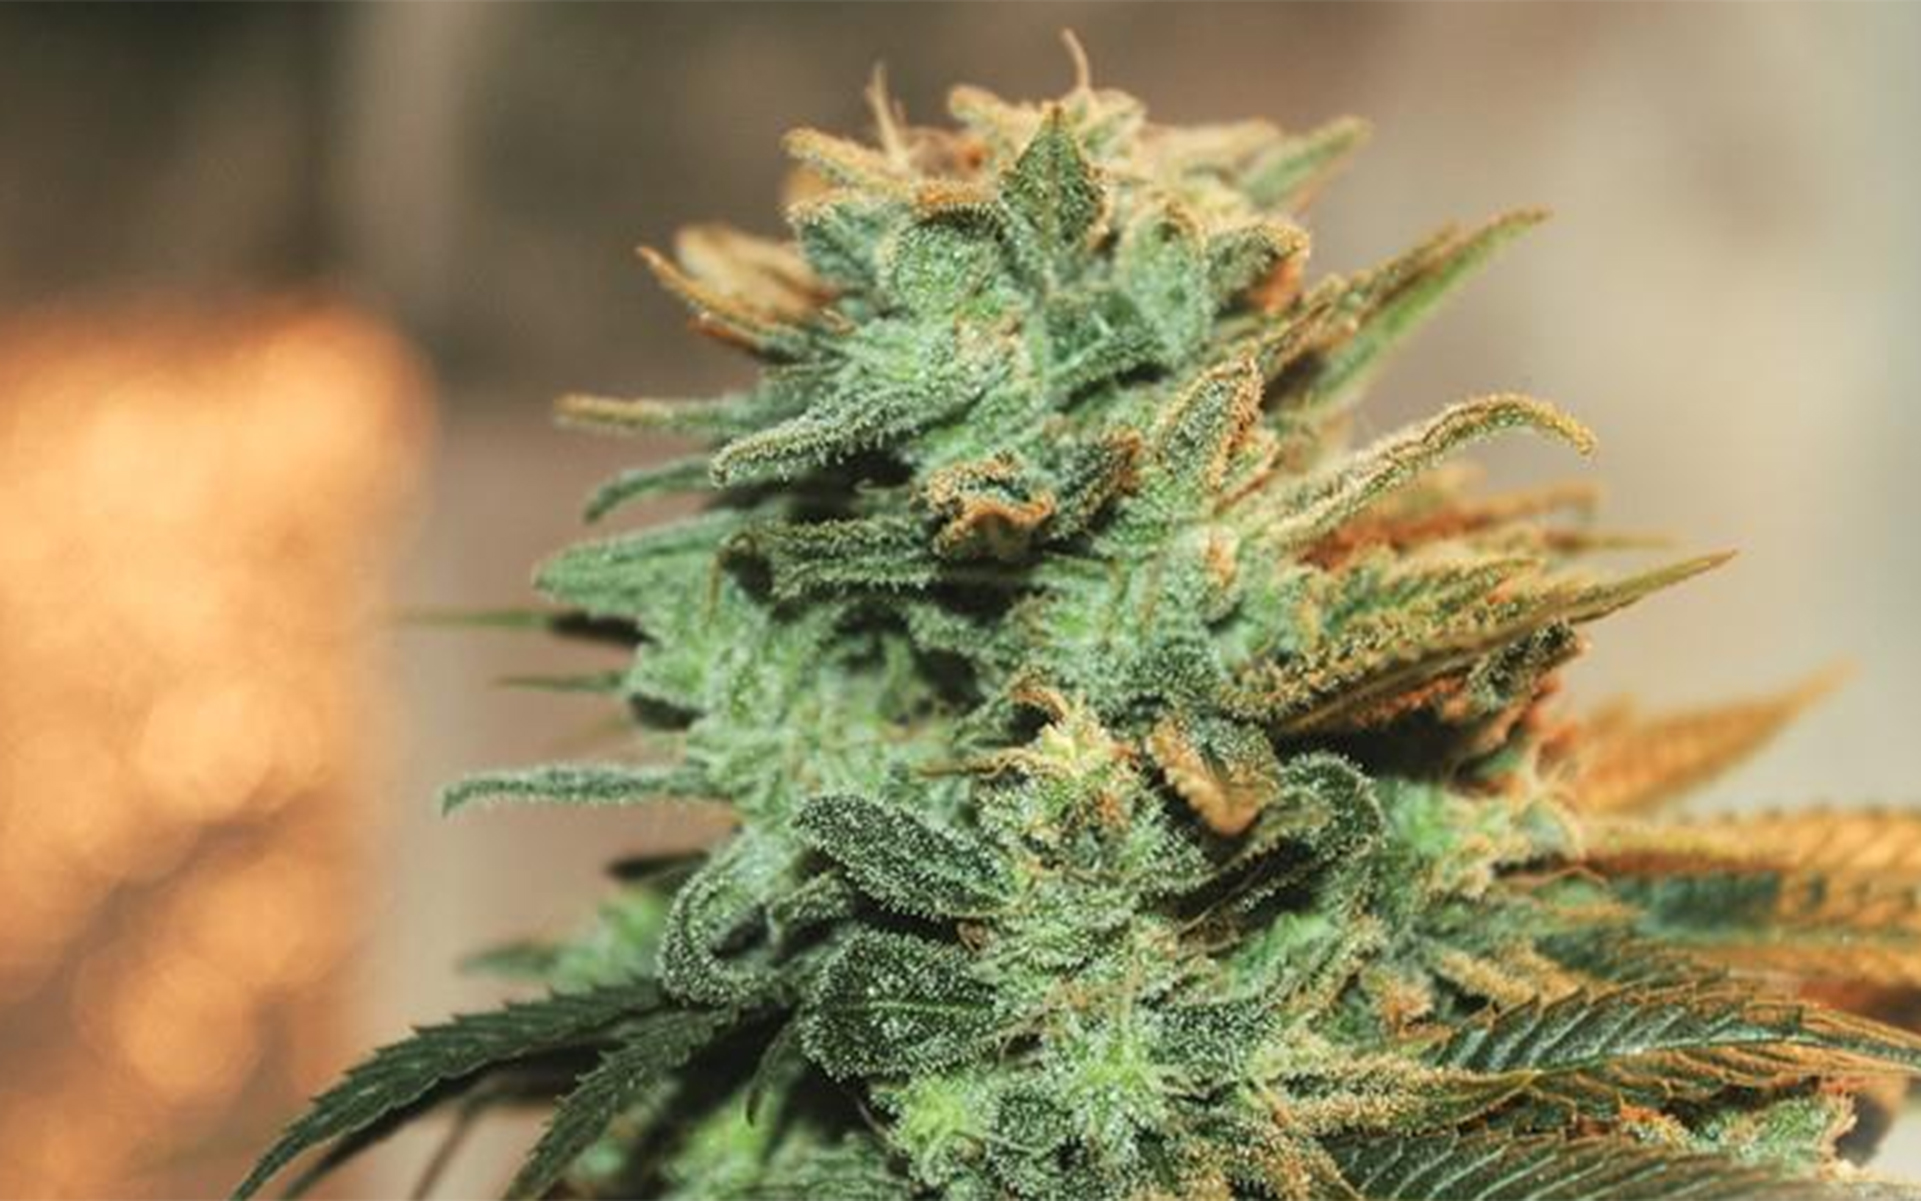 Cómo saber si la marihuana es buena – I Wanna Grow